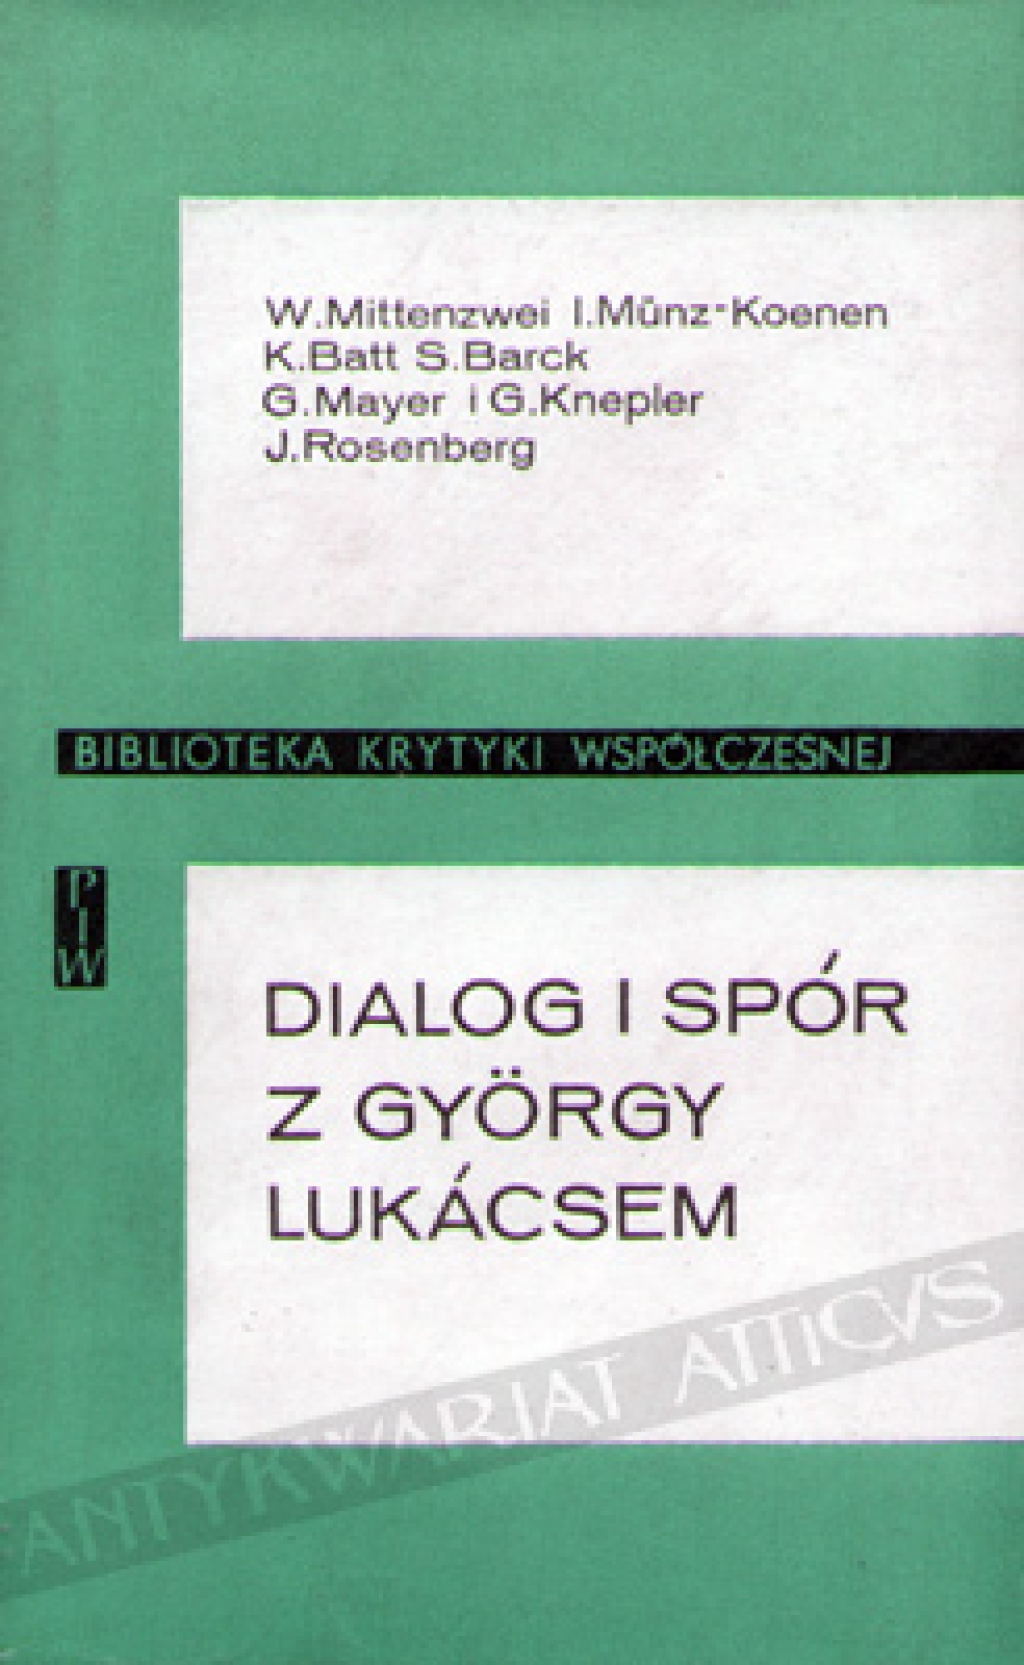 Dialog i spór z Gyorgy Lukacsem. Polemiki metodologiczne